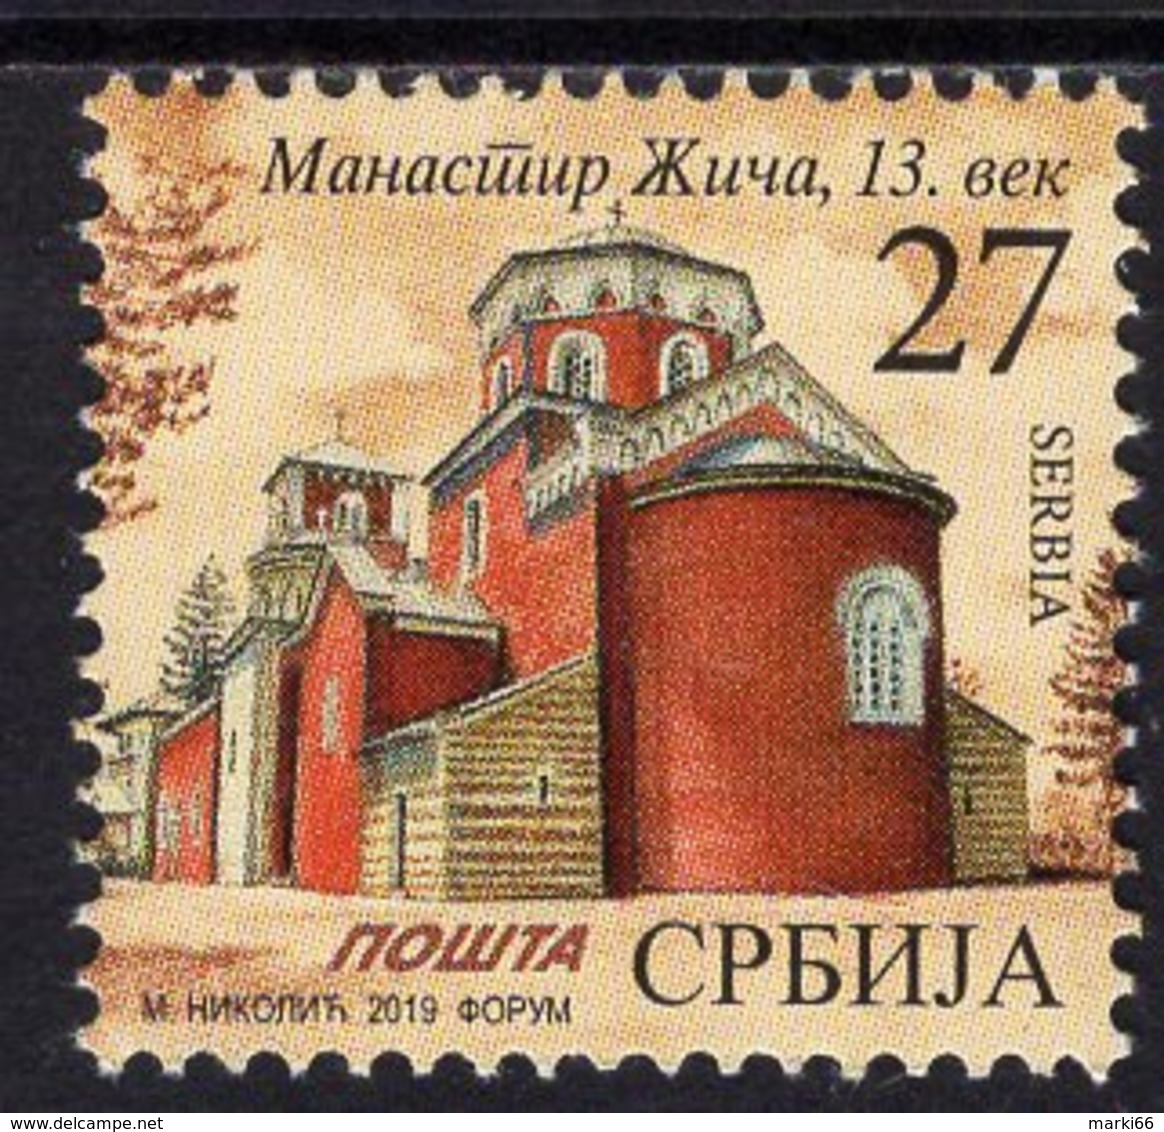 Serbia - 2019 - Zica Monastery - Mint Definitive Stamp - Serbia